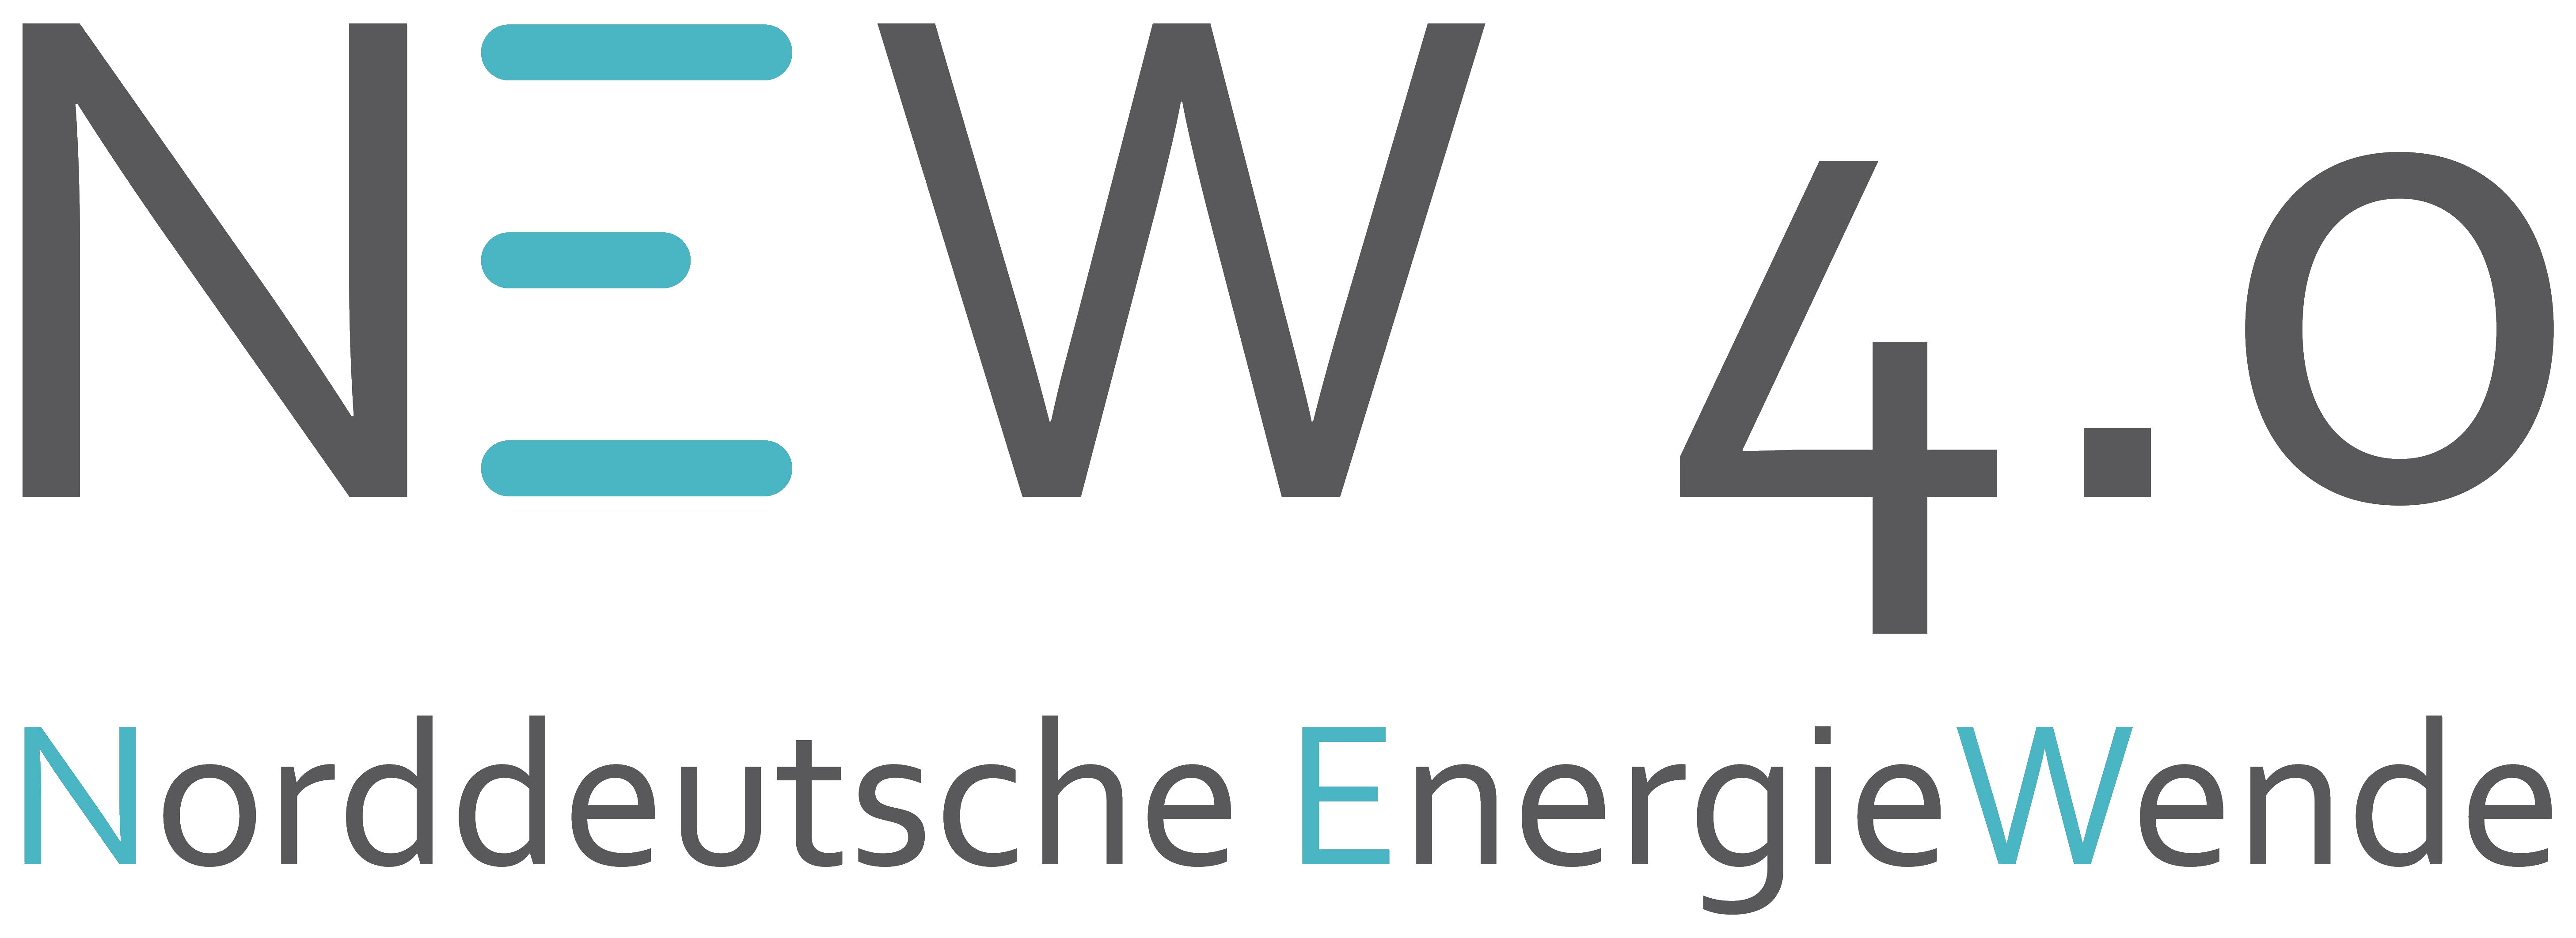 New 4.0 Norddeutsche Energie Wende